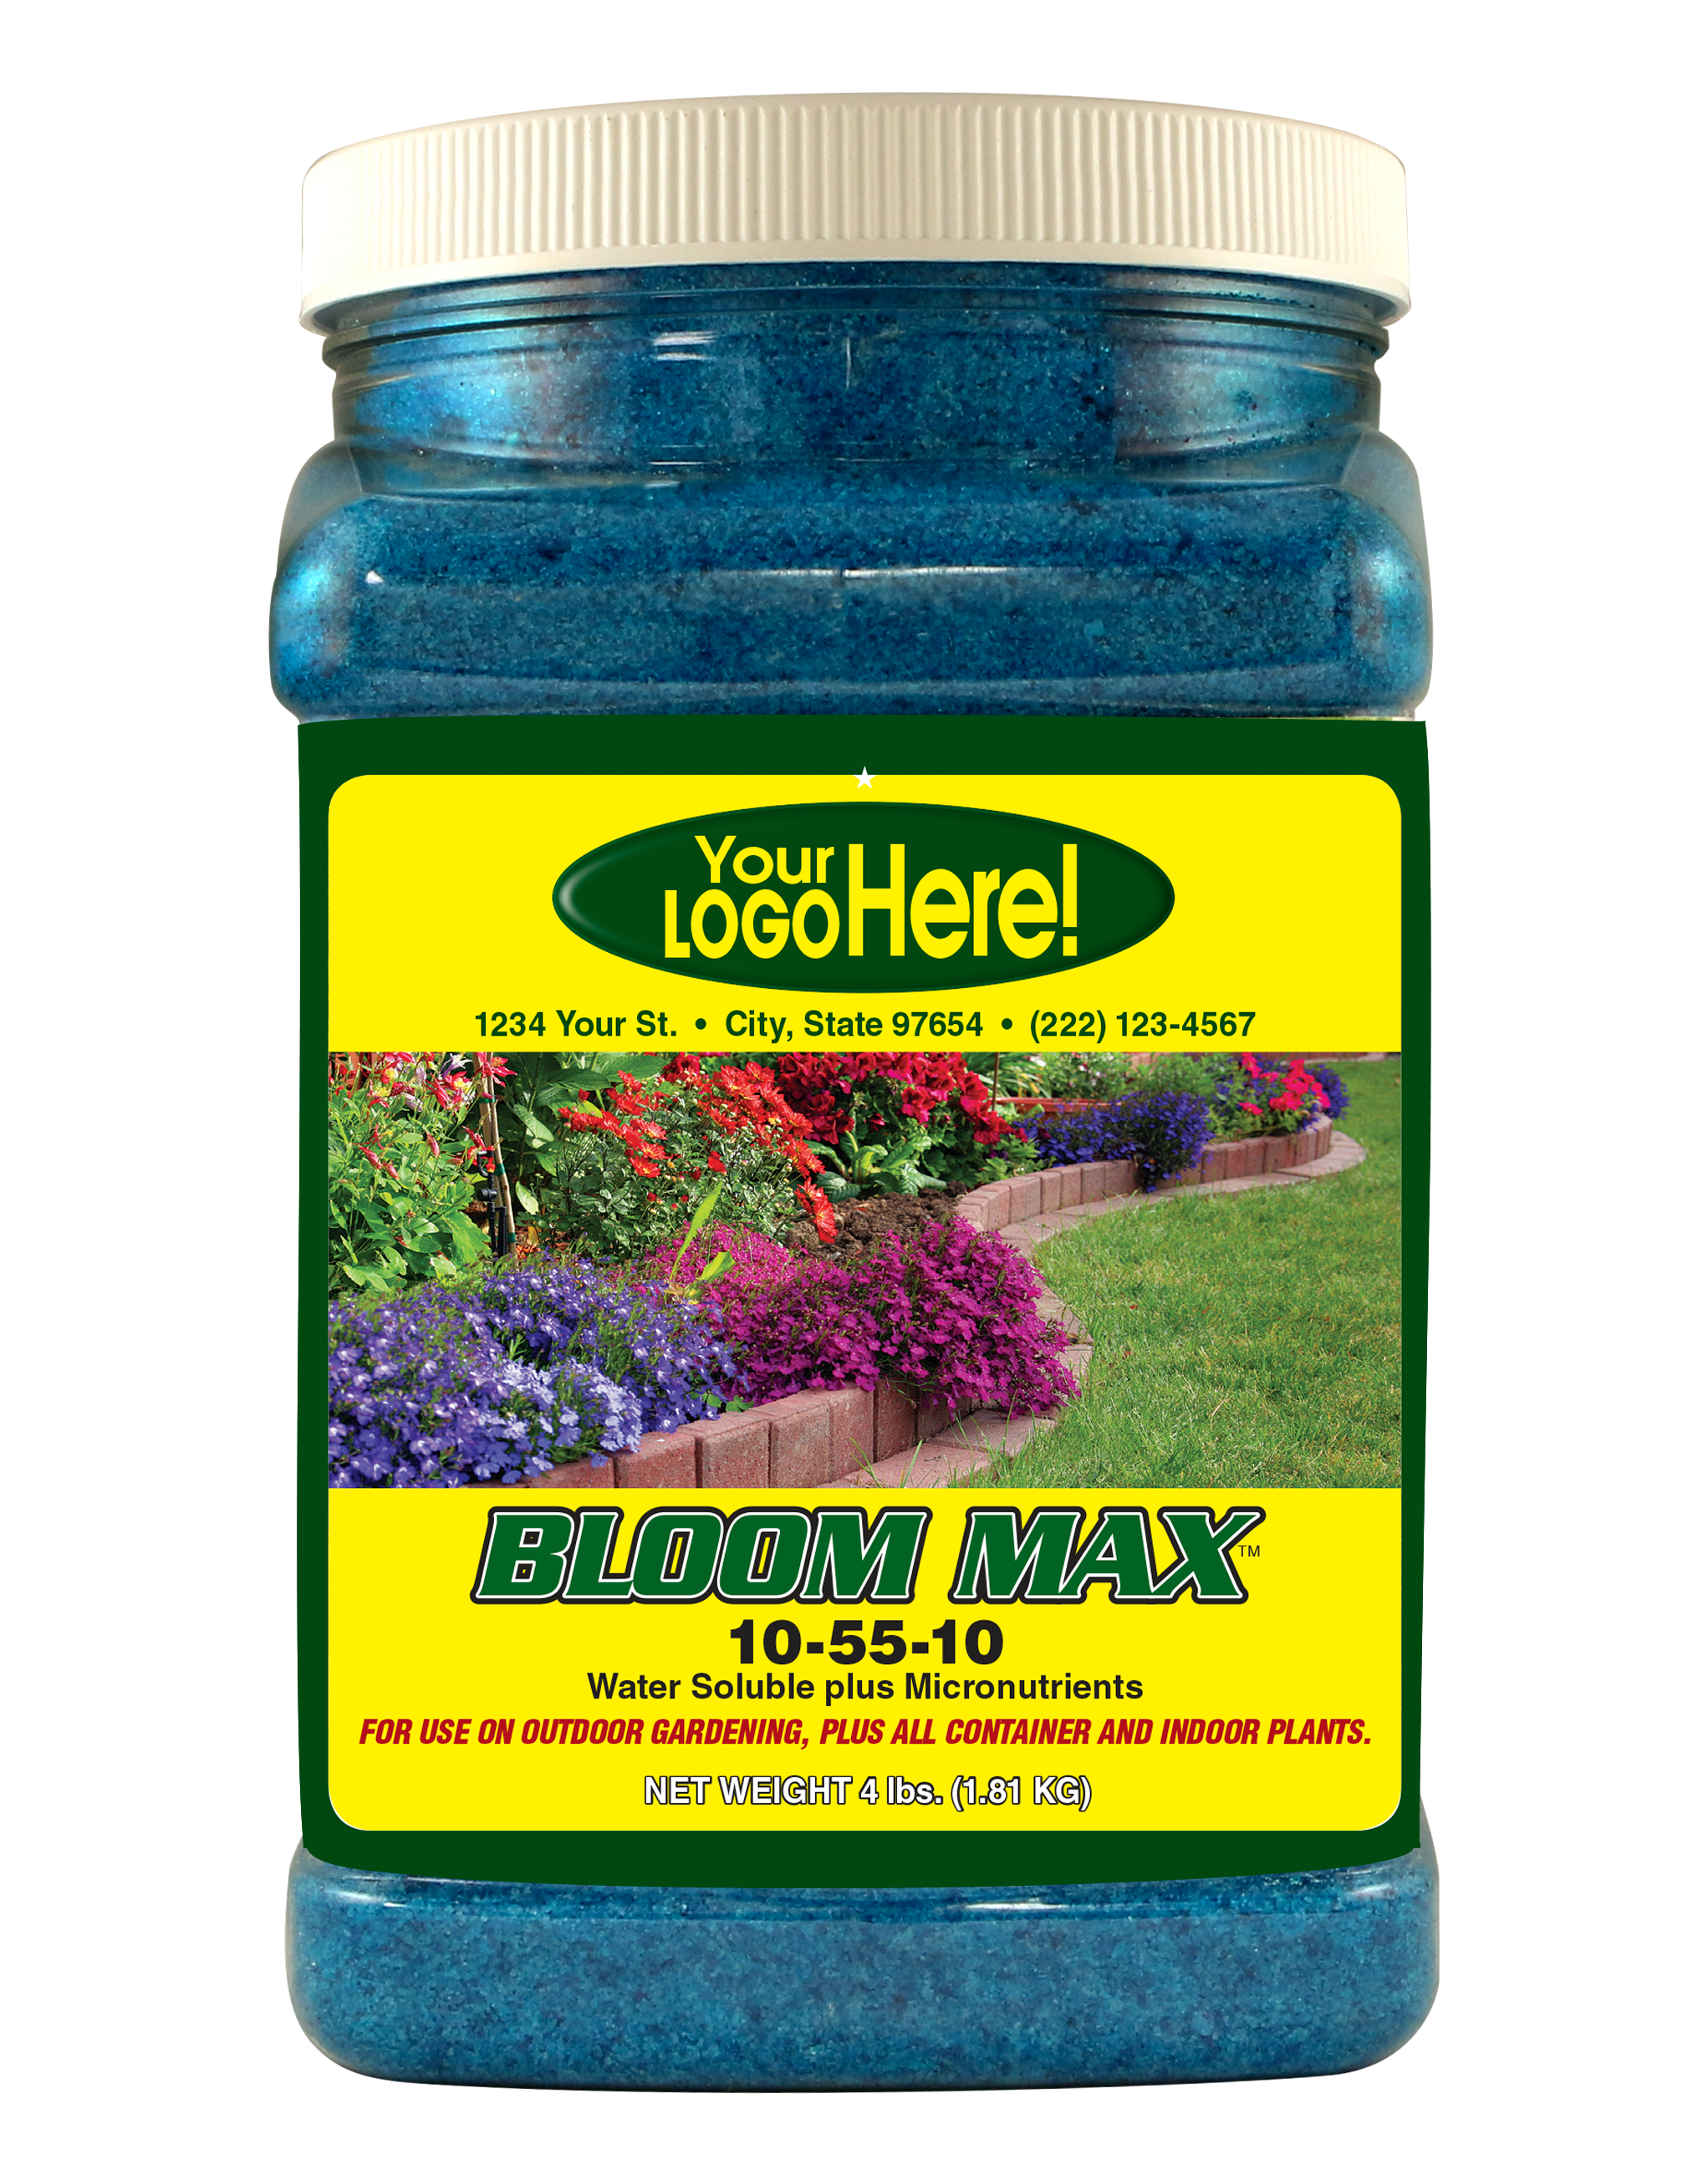 Bloom Max Label